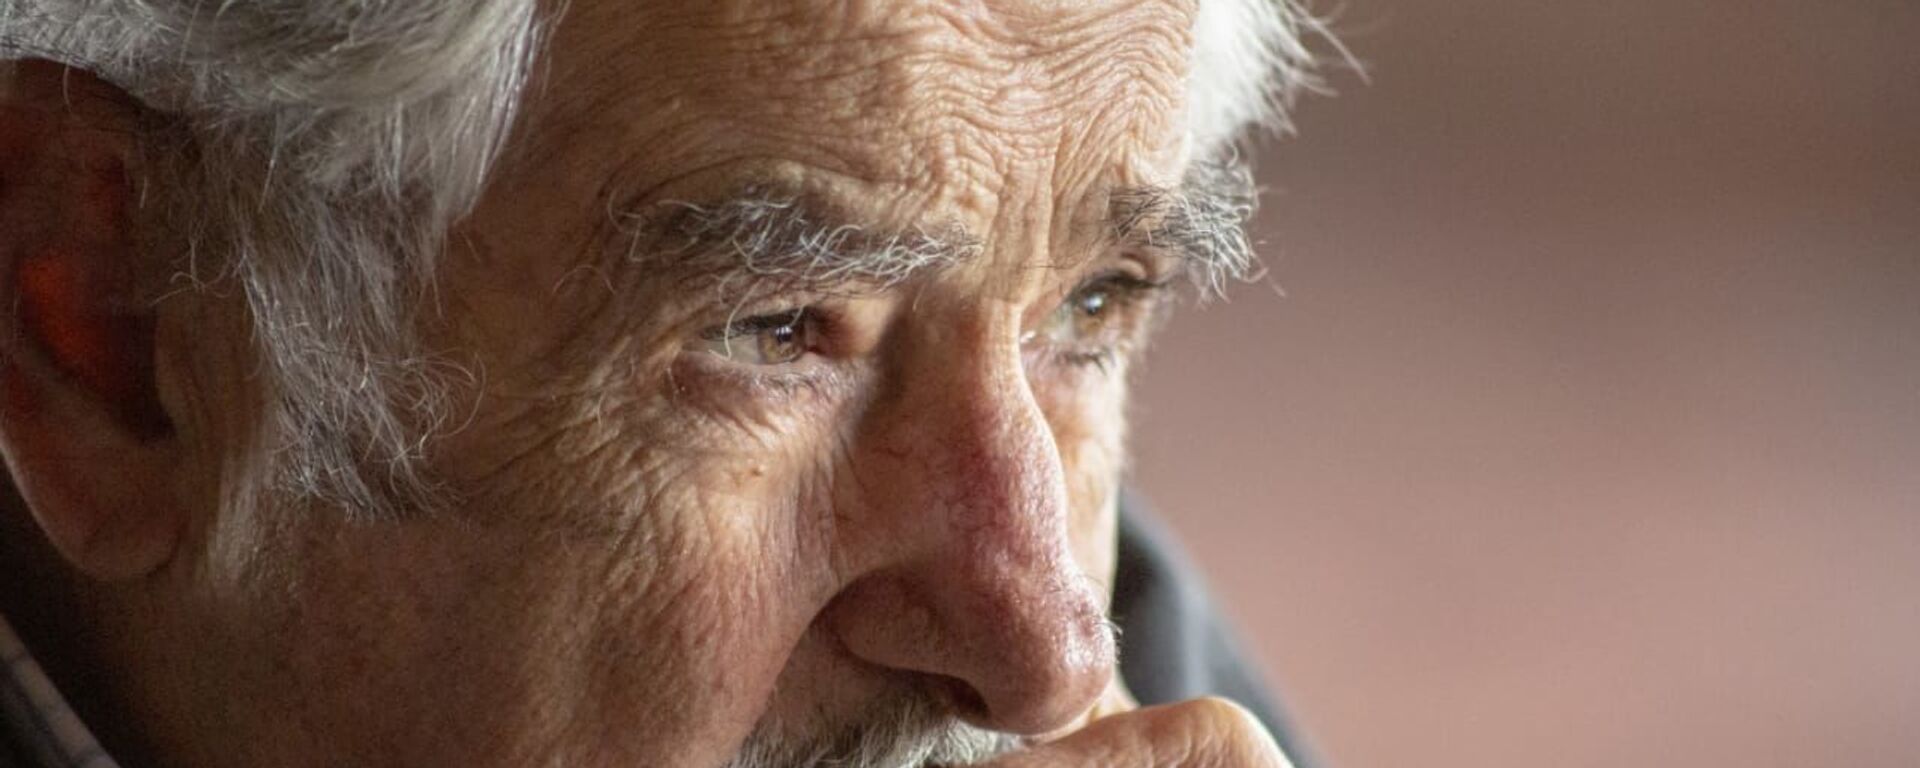 José Mujica - Sputnik Mundo, 1920, 28.04.2021